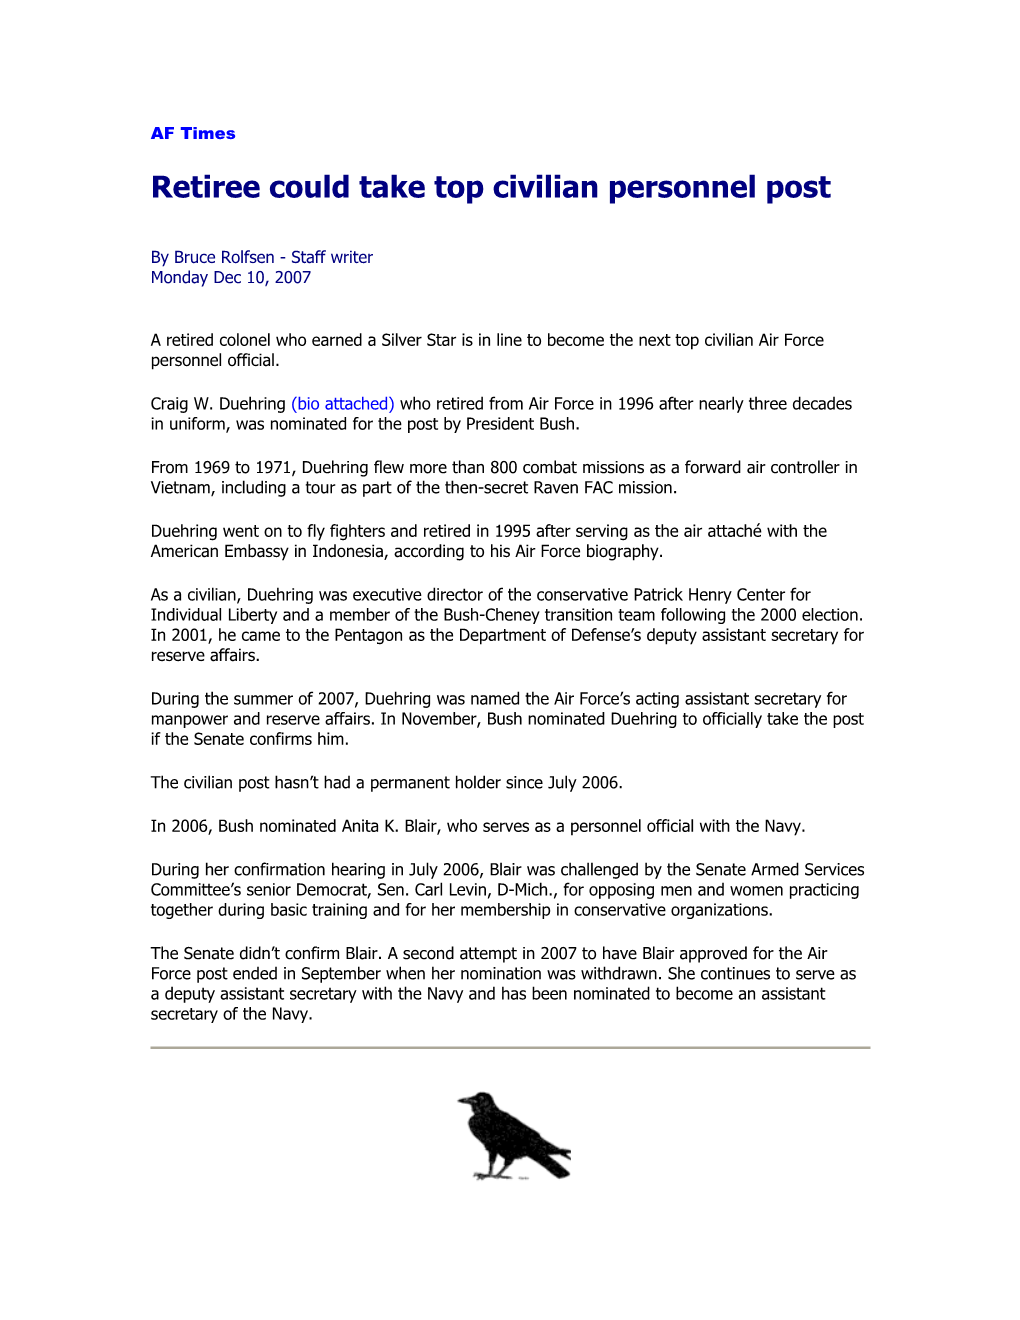 Retiree Could Take Top Civilian Personnel Post